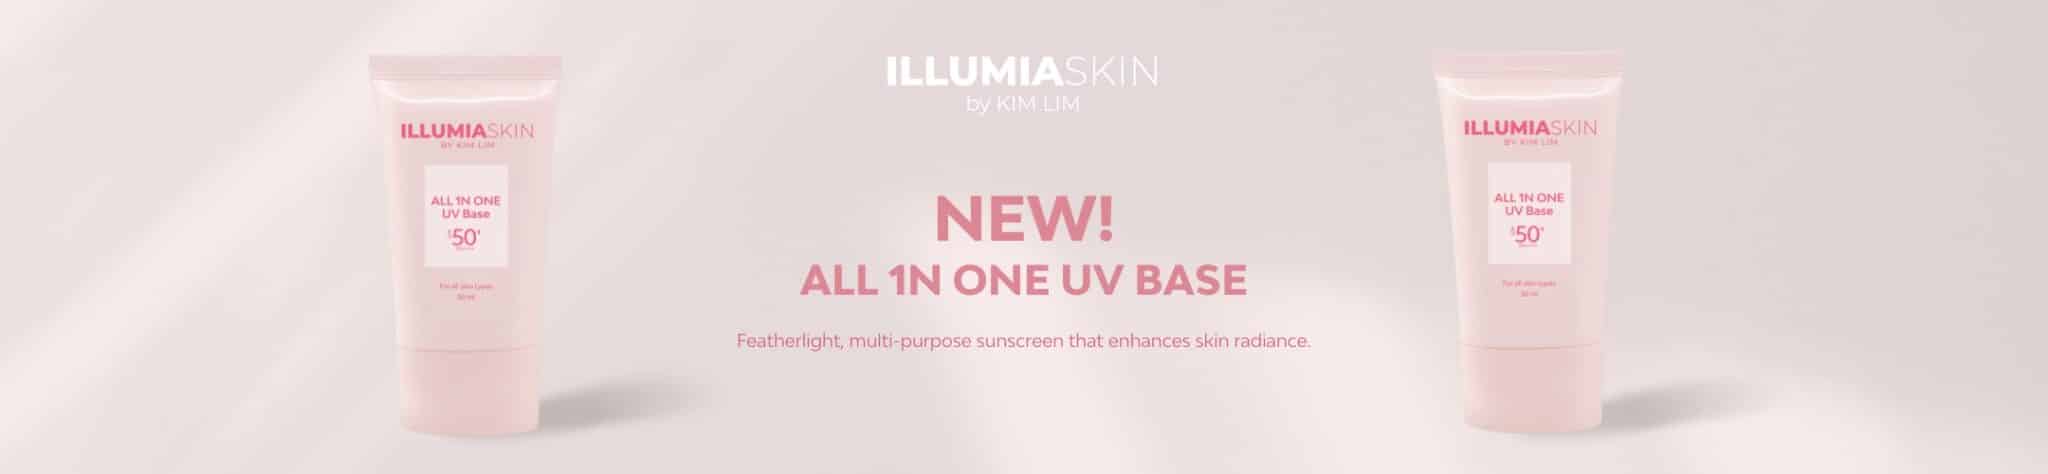 All 1n One UV Base Banner (1)